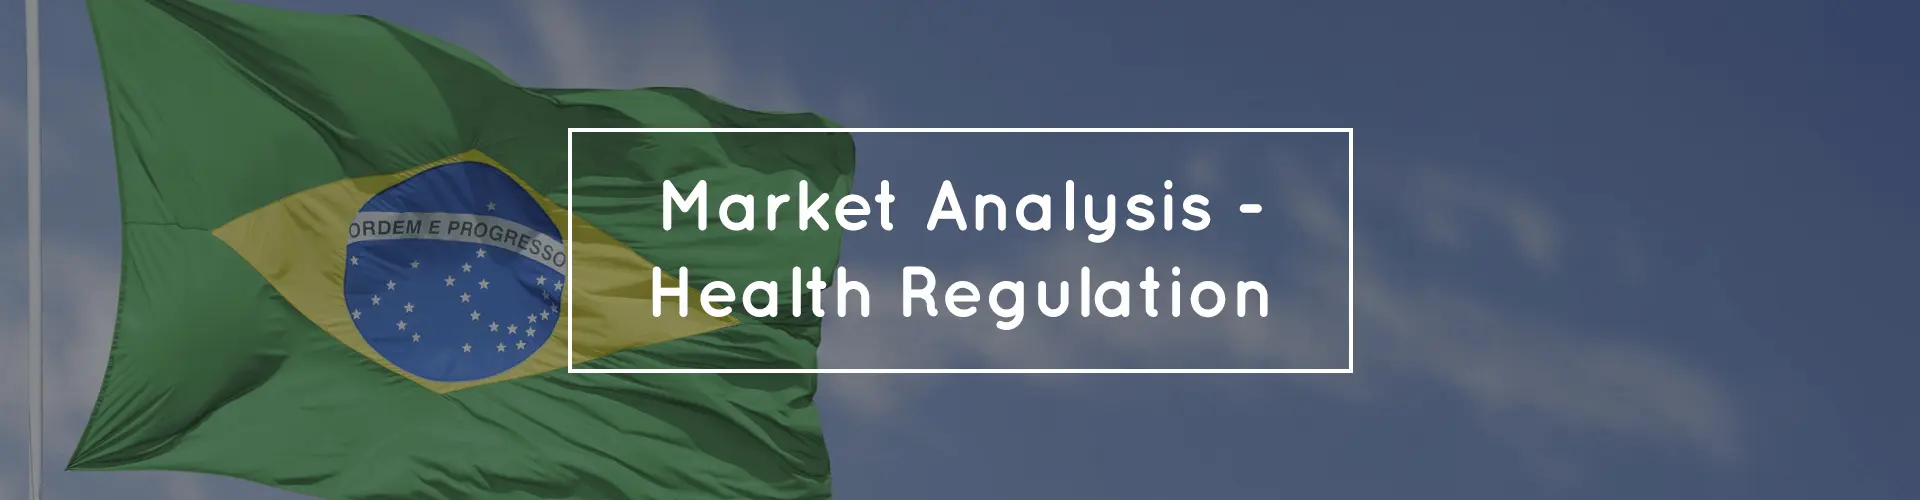 market analysis - health regulation